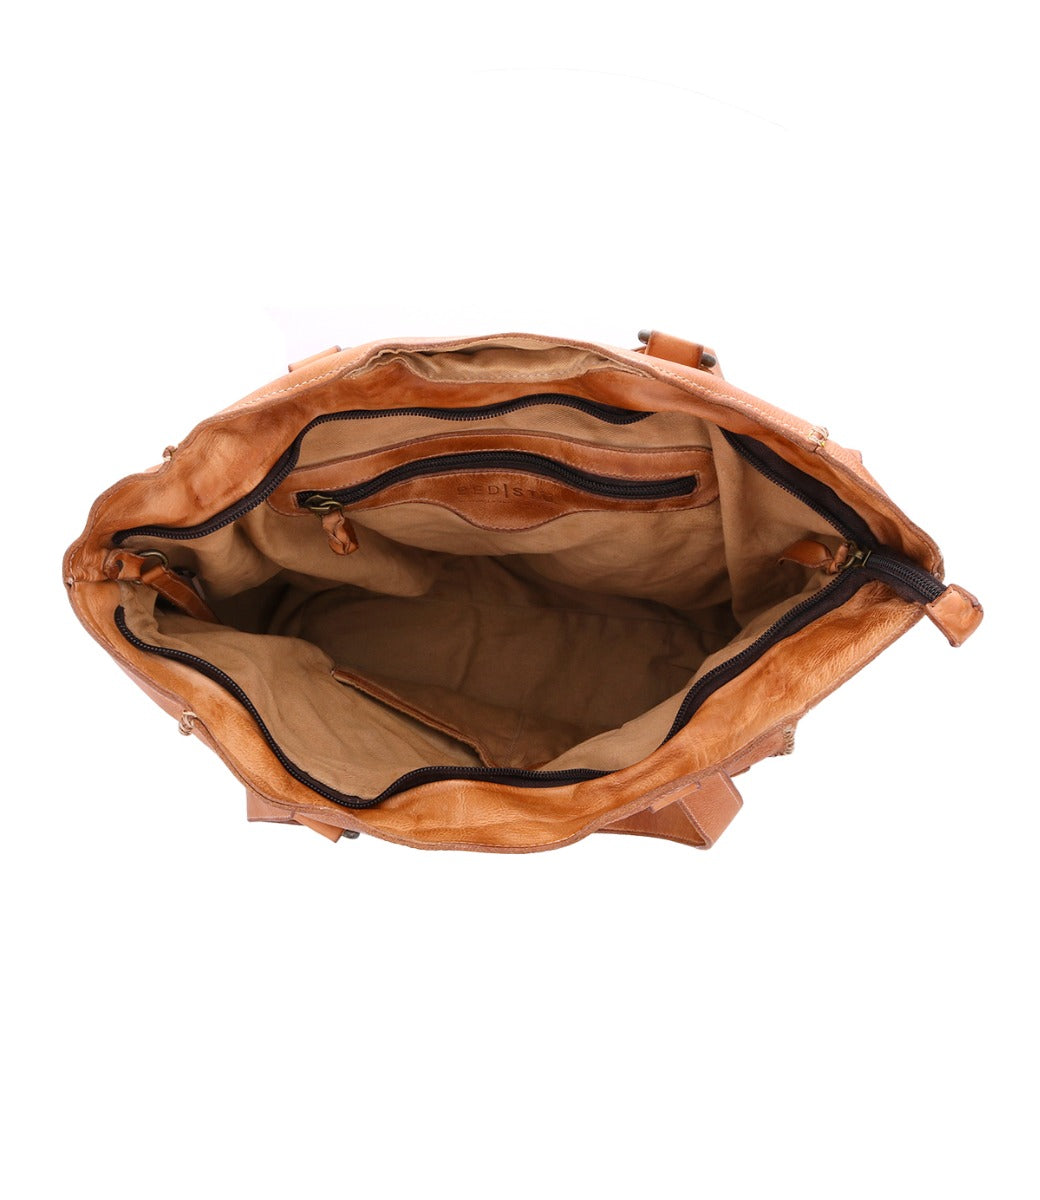 The inside of a Bed Stu Celindra LTC leather tote bag.